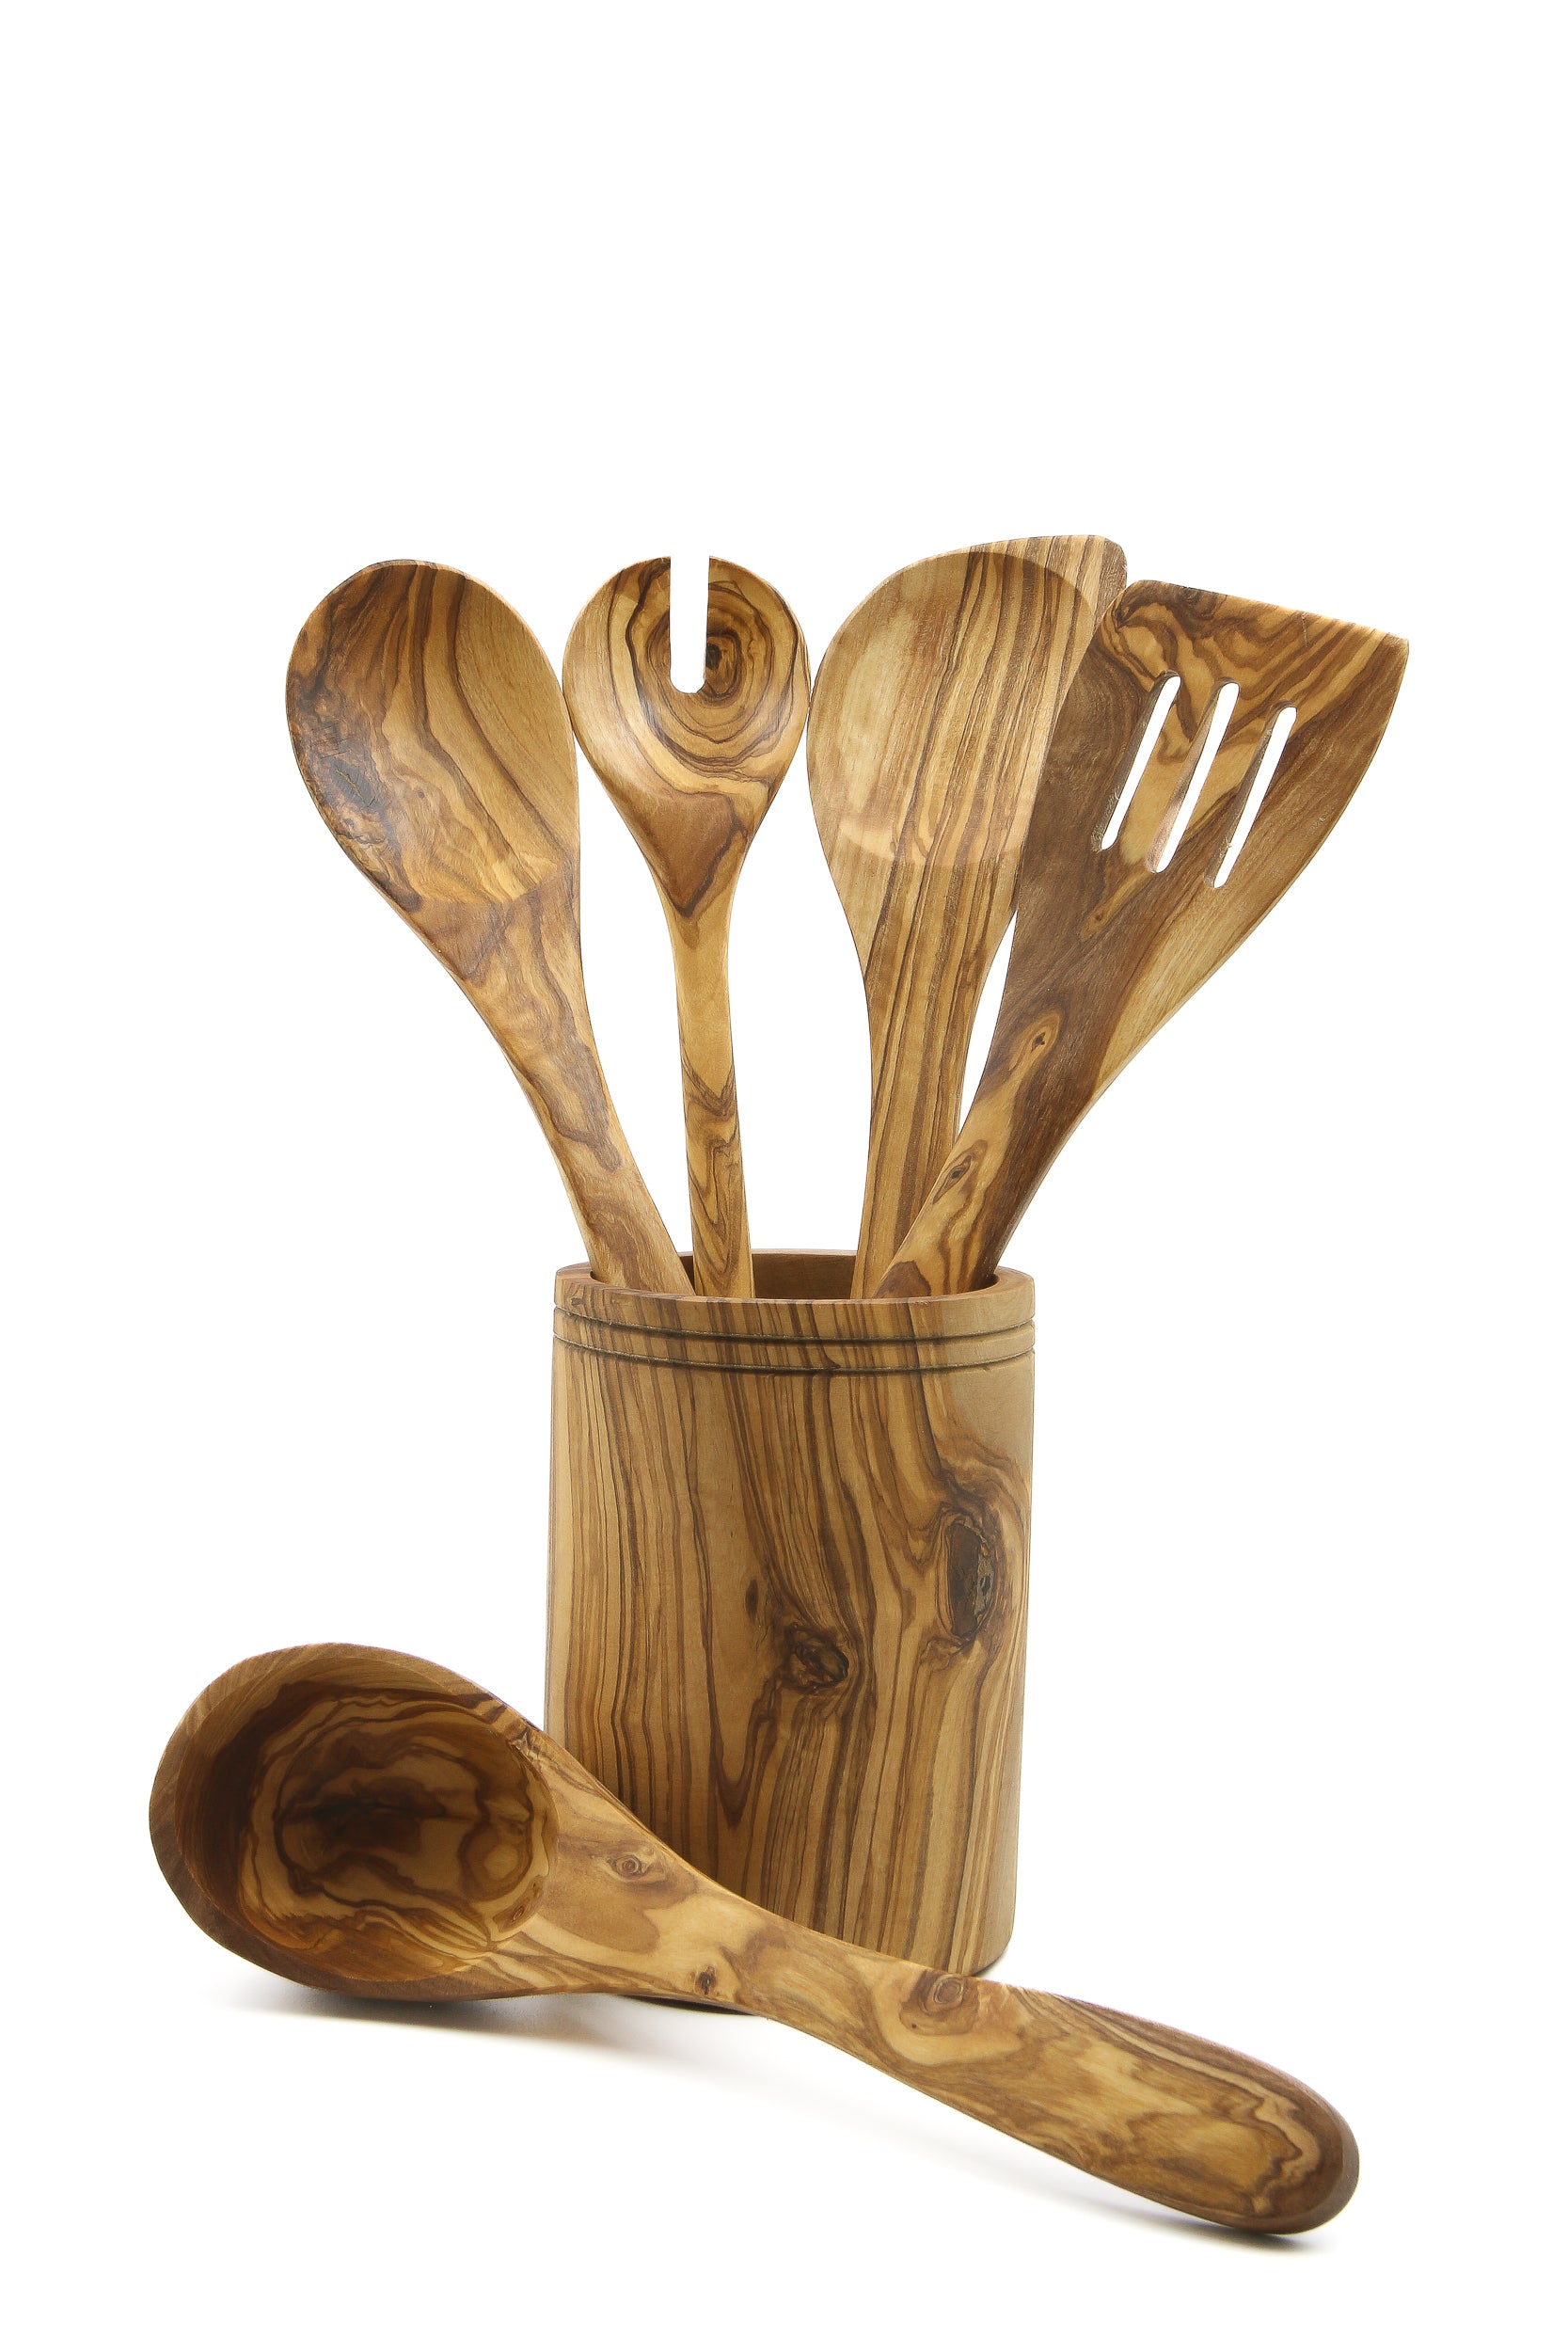 Eco-friendly olive wood utensils set, including a spoon, forks, strainer, ladle, and holder